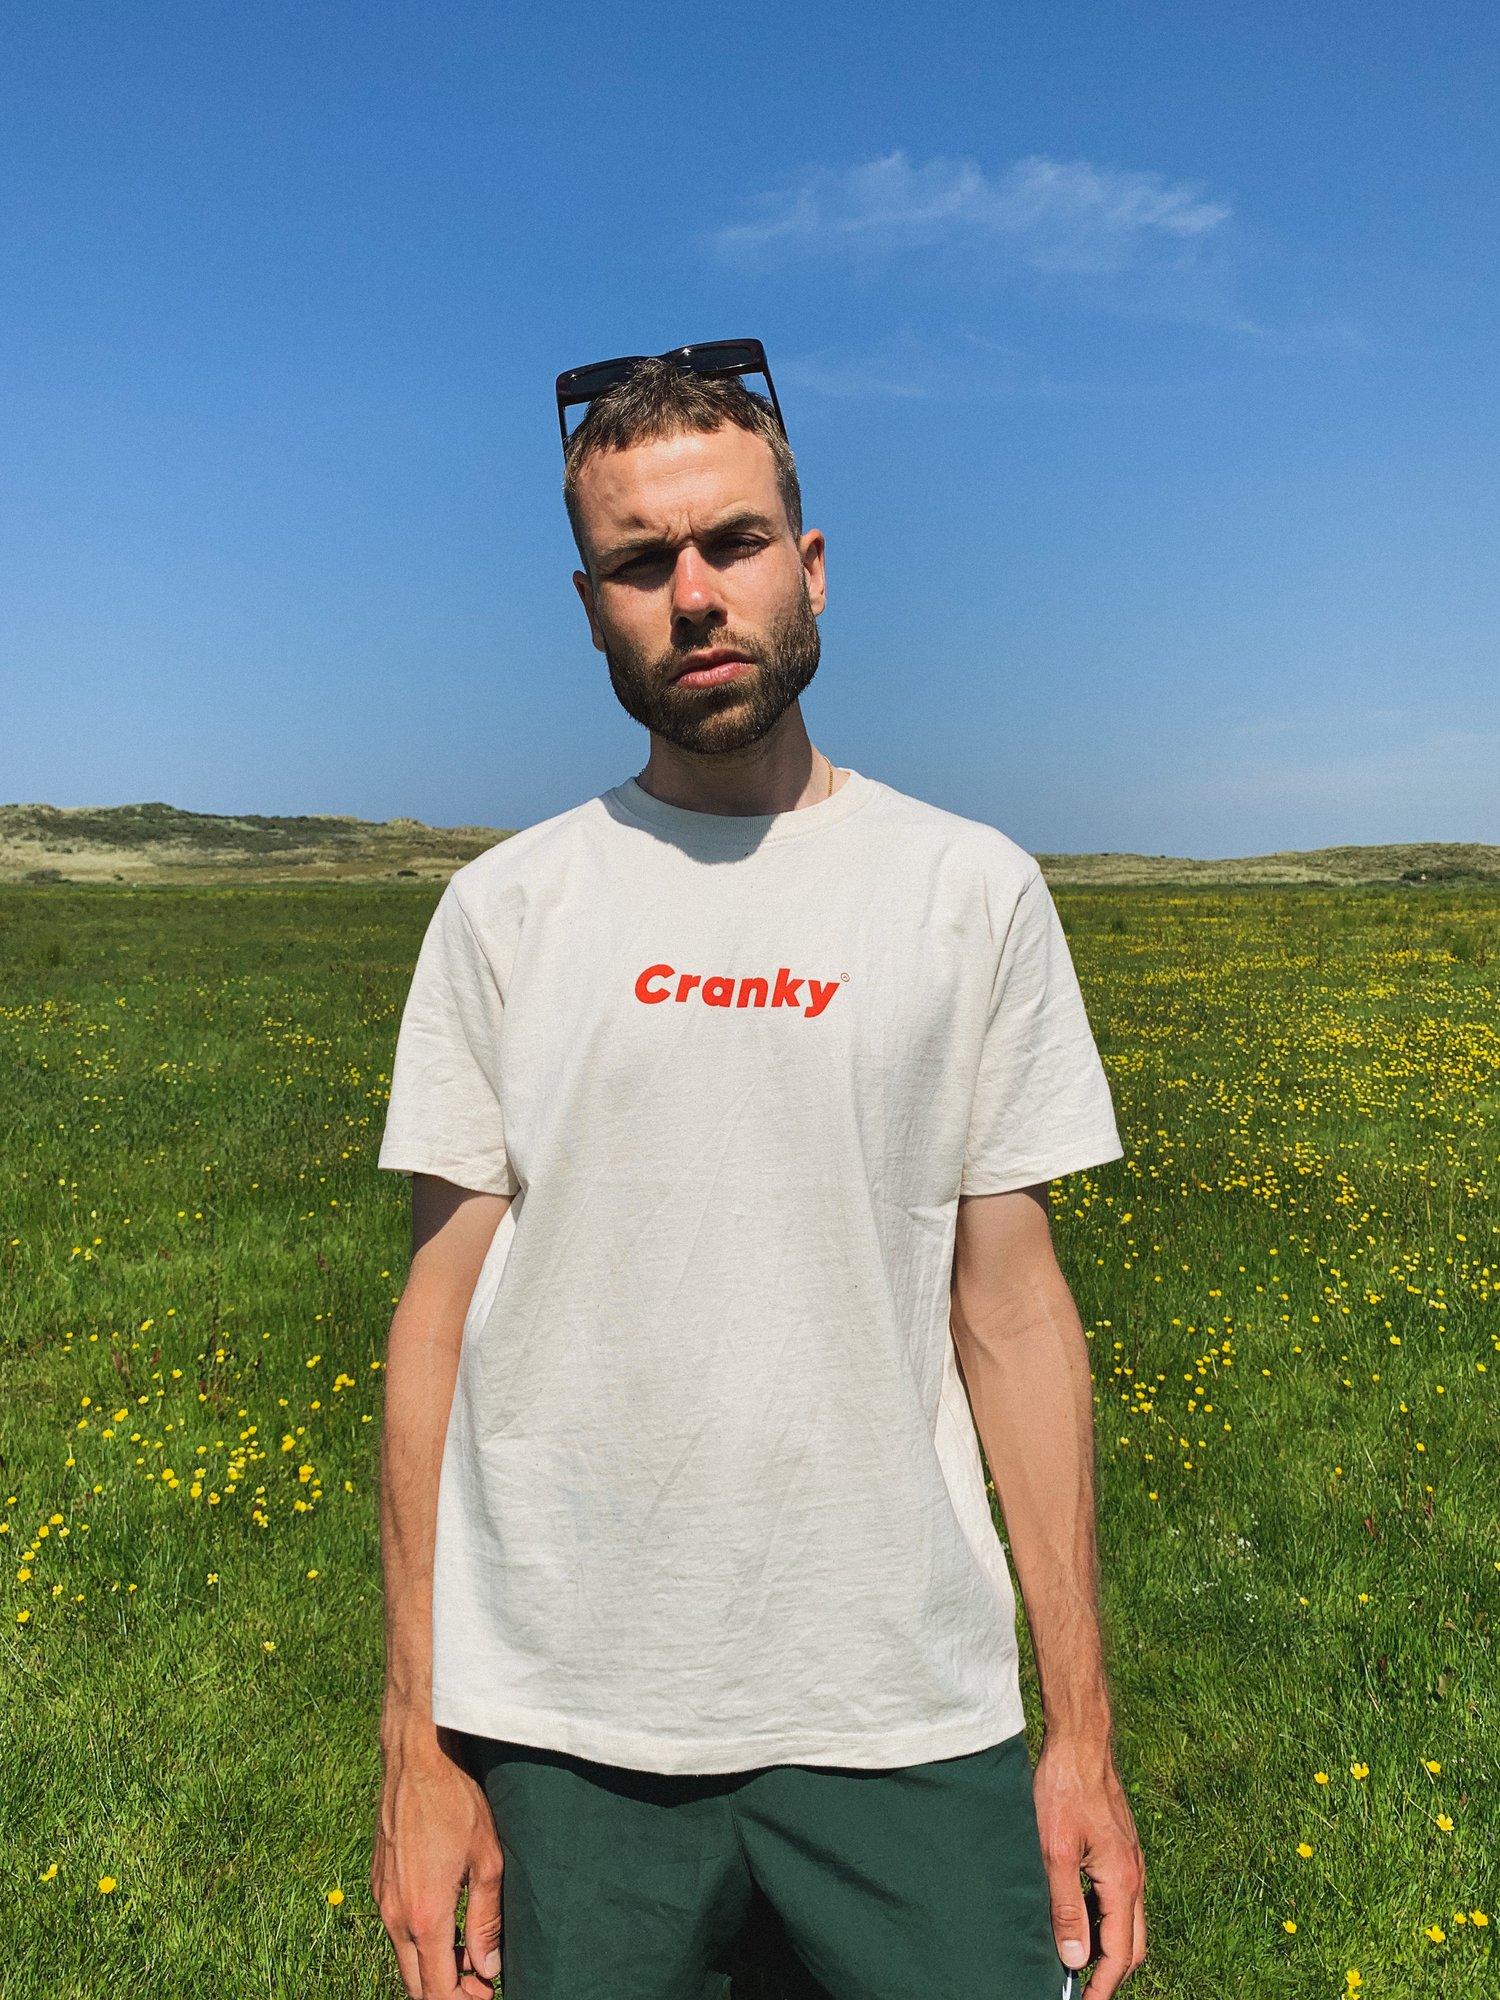 Image of Cranky Tee